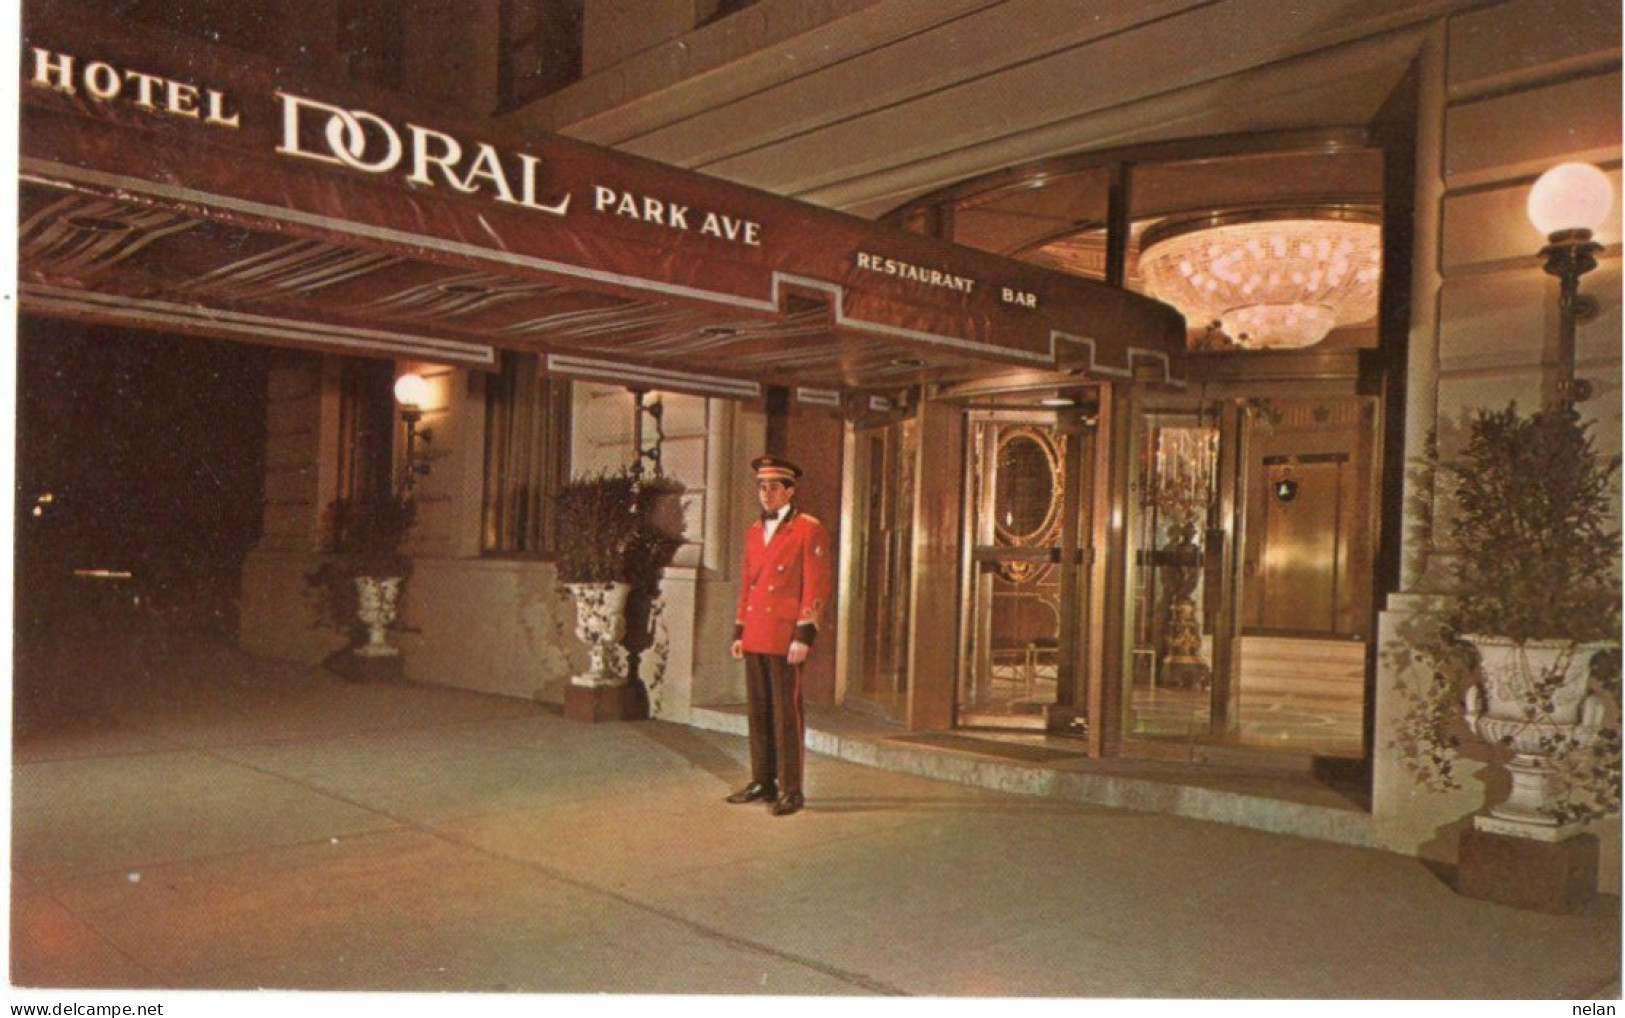 DORAL PARK AVENUE HOTEL - NEW YORK CITY - Cafes, Hotels & Restaurants